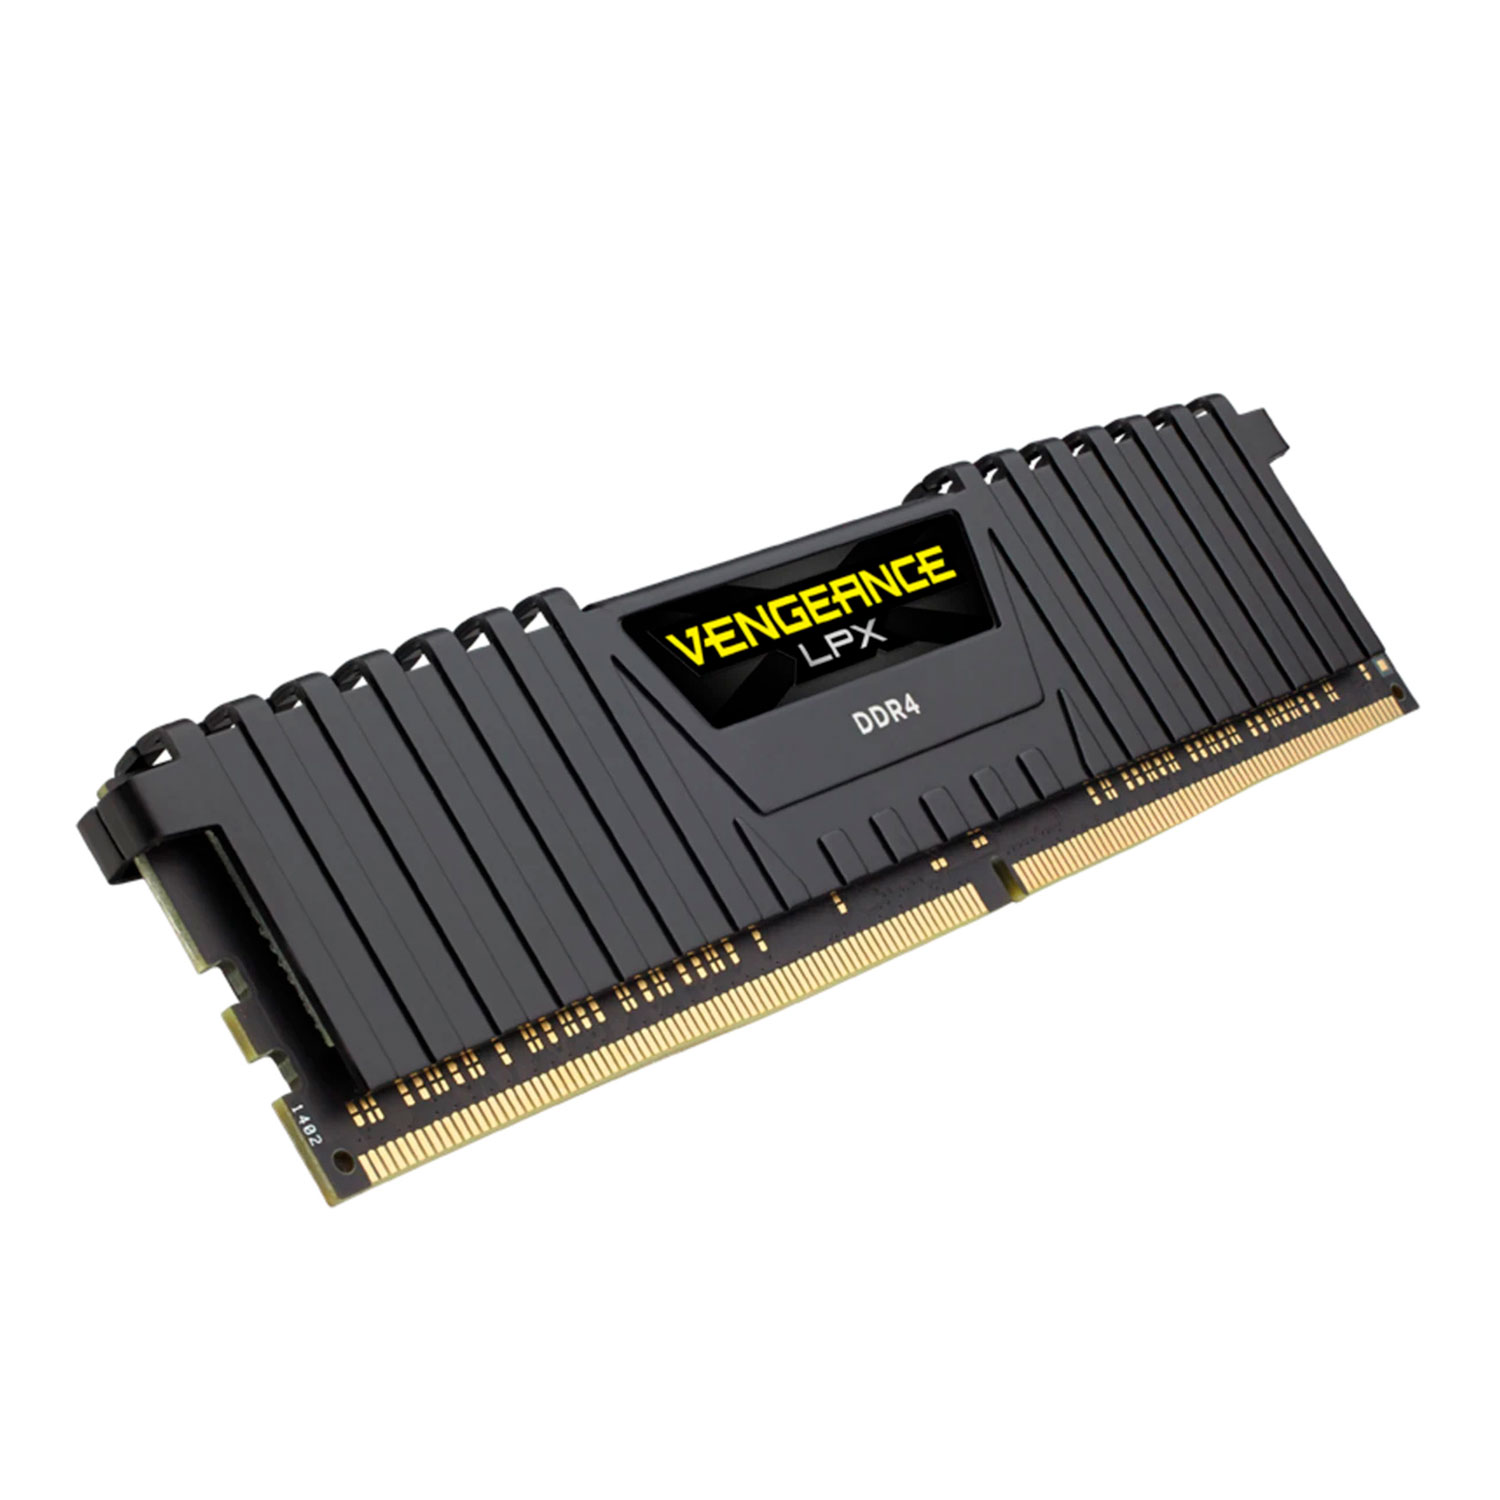 Memória RAM Corsair Vengeance LPX 16GB (2x8GB) DDR4 3200MHz - CMK16GX4M2E3200C16